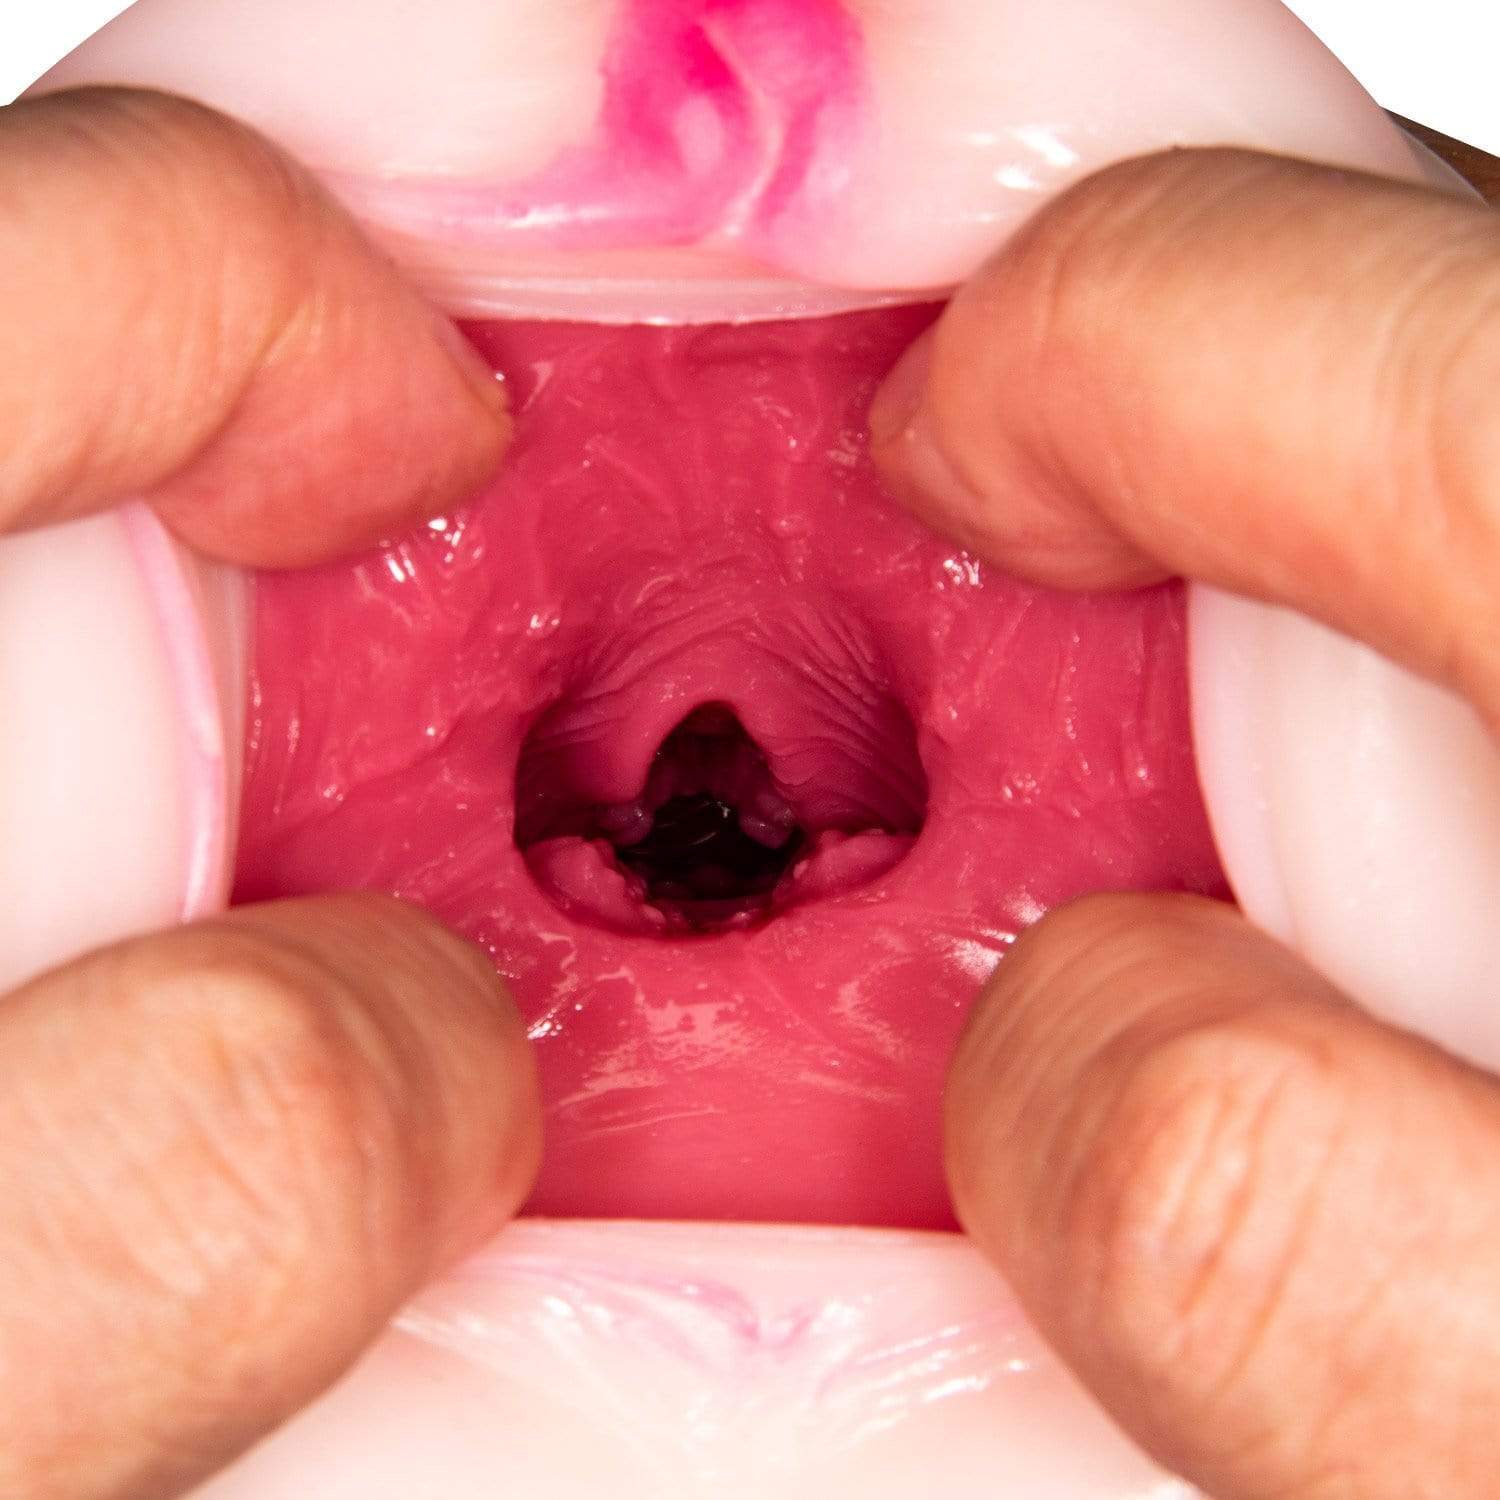 NPG - Filthy Doctor Clinic Insertion Treatment Reika Hashimoto Onahole (Beige) -  Masturbator Vagina (Non Vibration)  Durio.sg